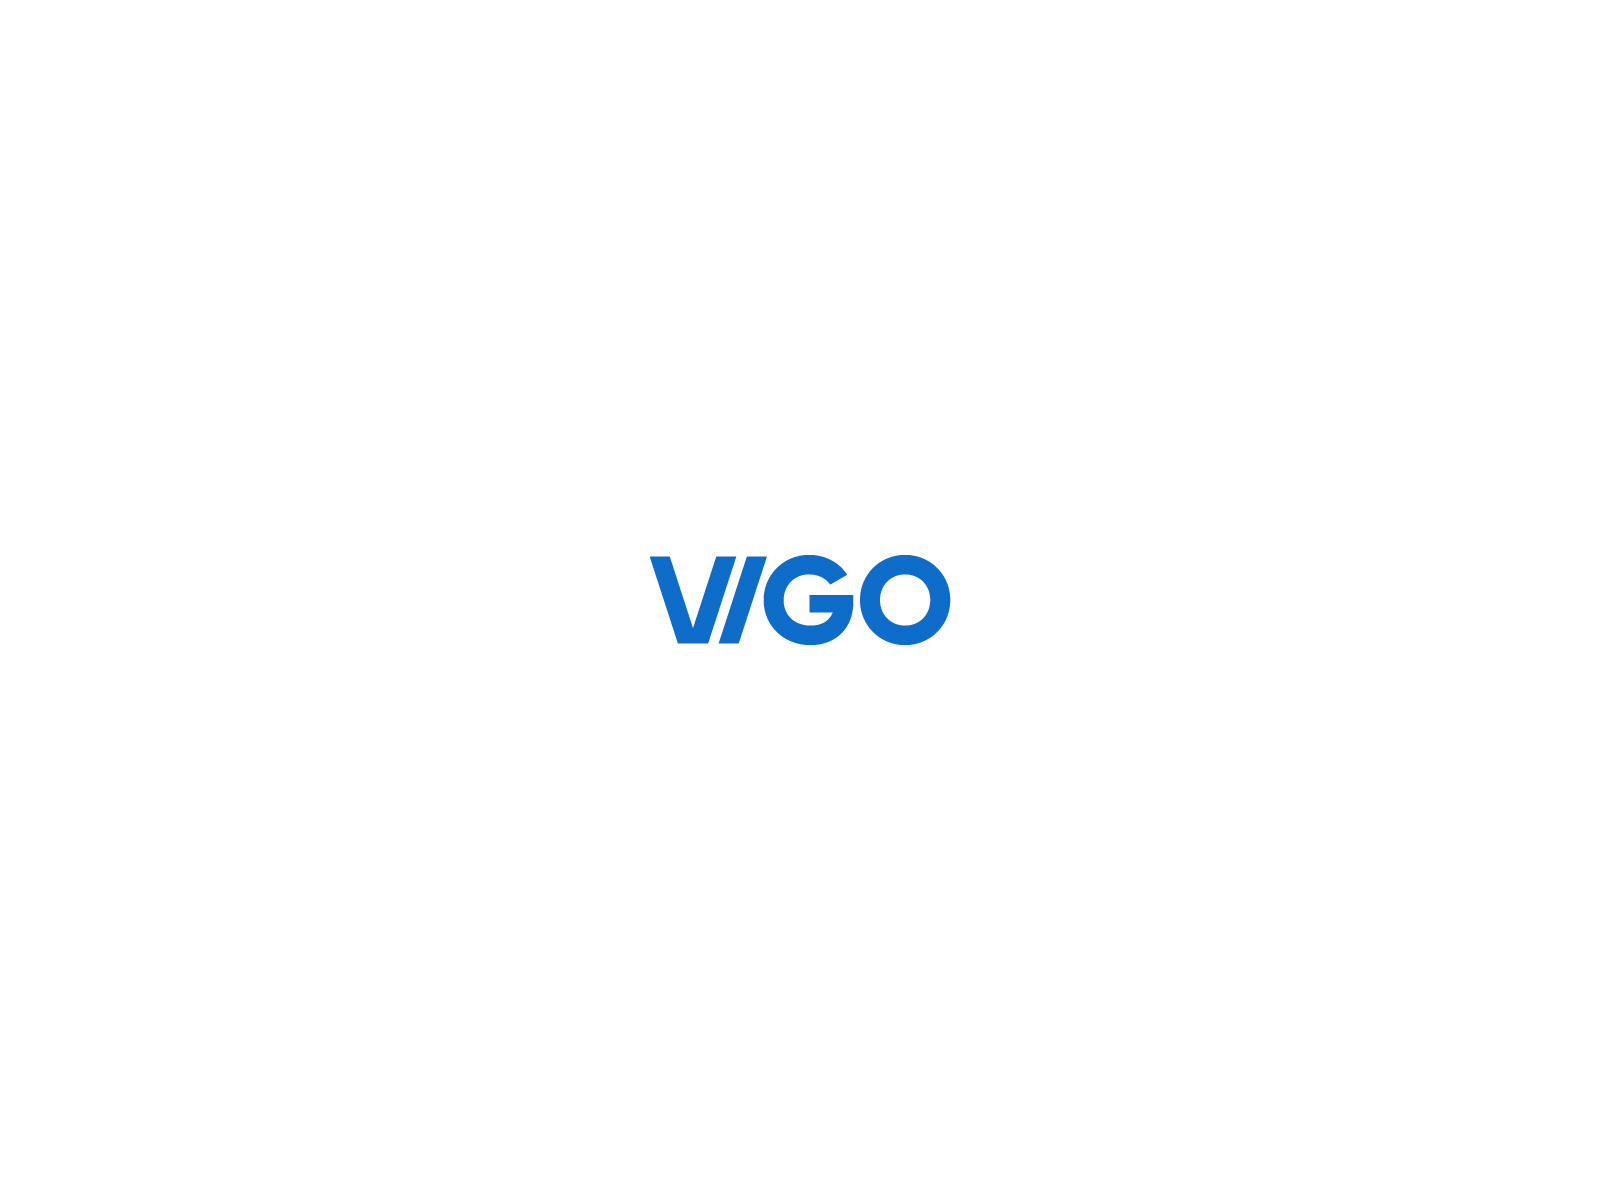 VIGO cloud encryption logo space storage tech